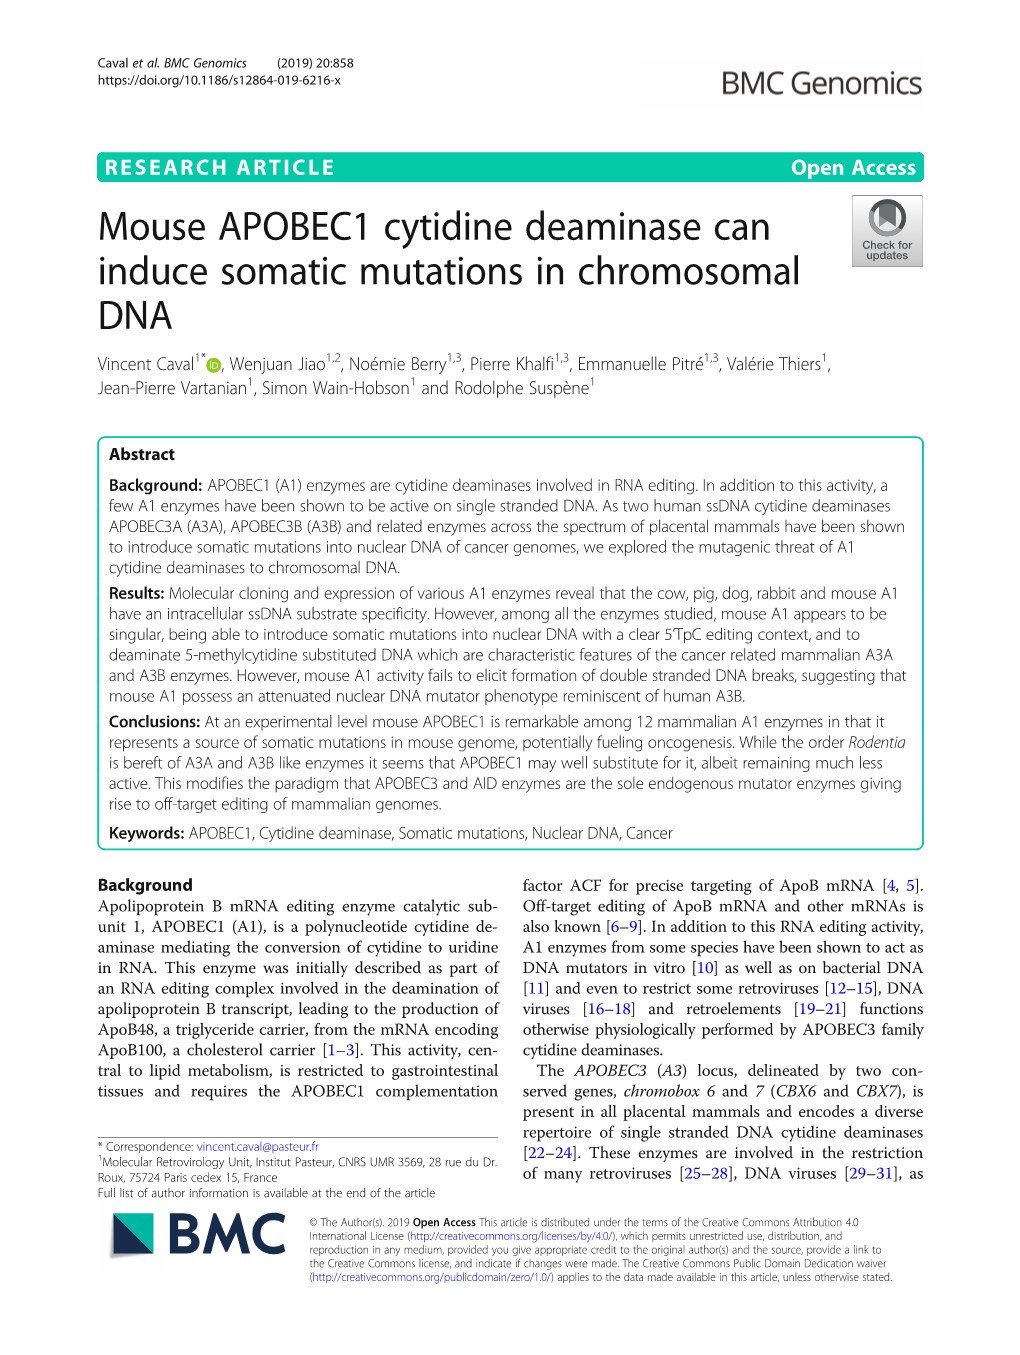 Mouse APOBEC1 Cytidine Deaminase Can Induce